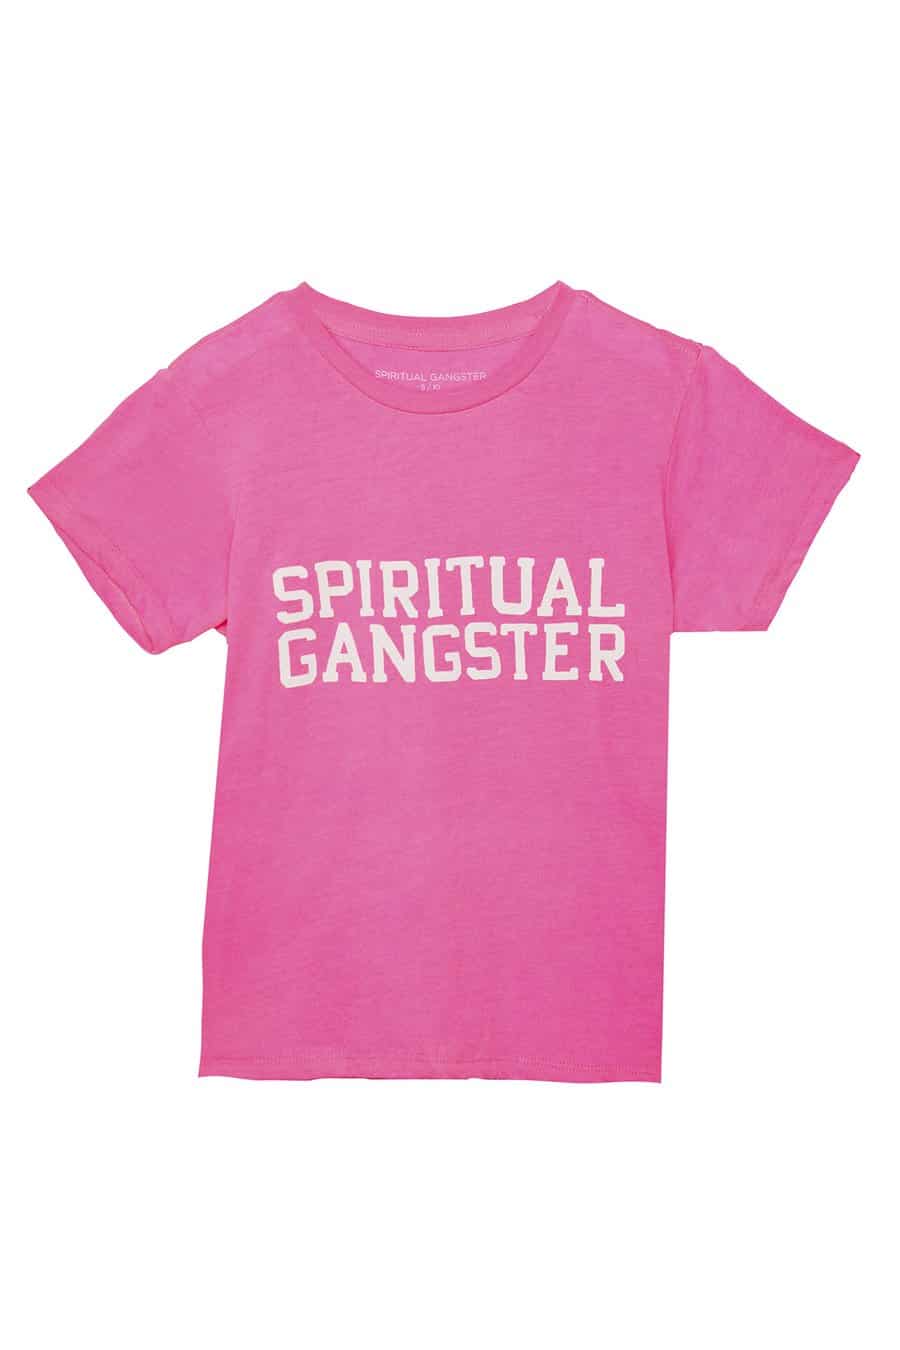 Spiritual Gangster Girls